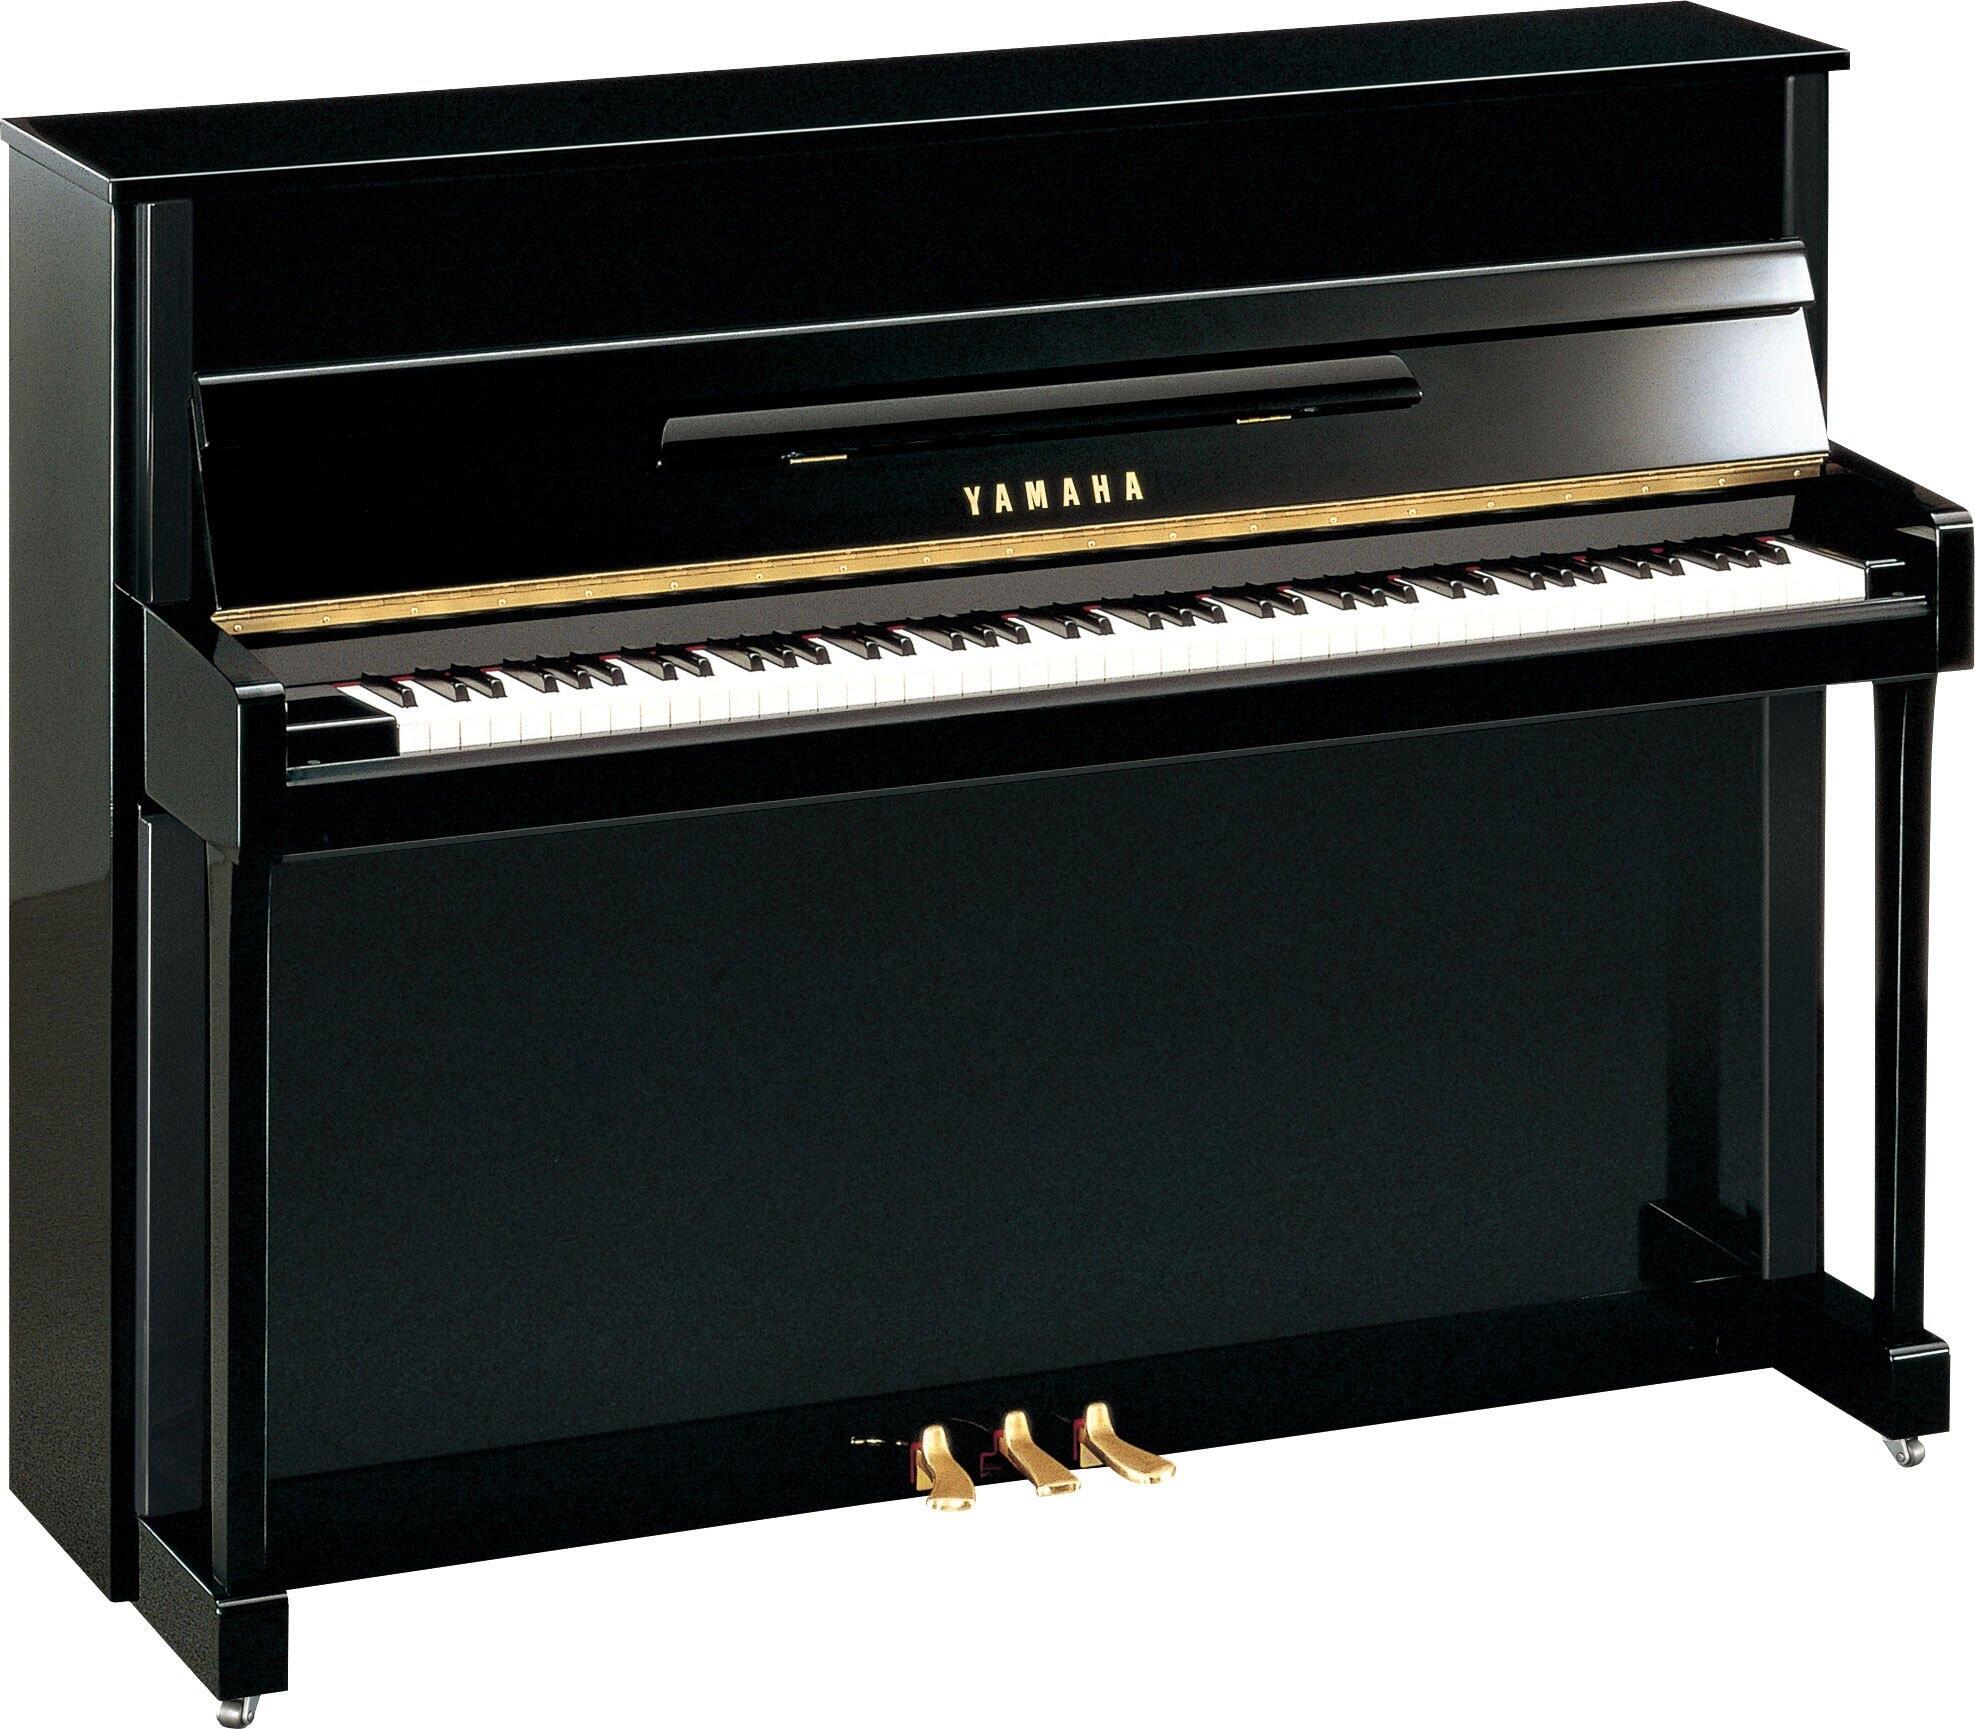 Yamaha Pianos Acoustic B2 PE Noir poli-brillant 113 cm : photo 1